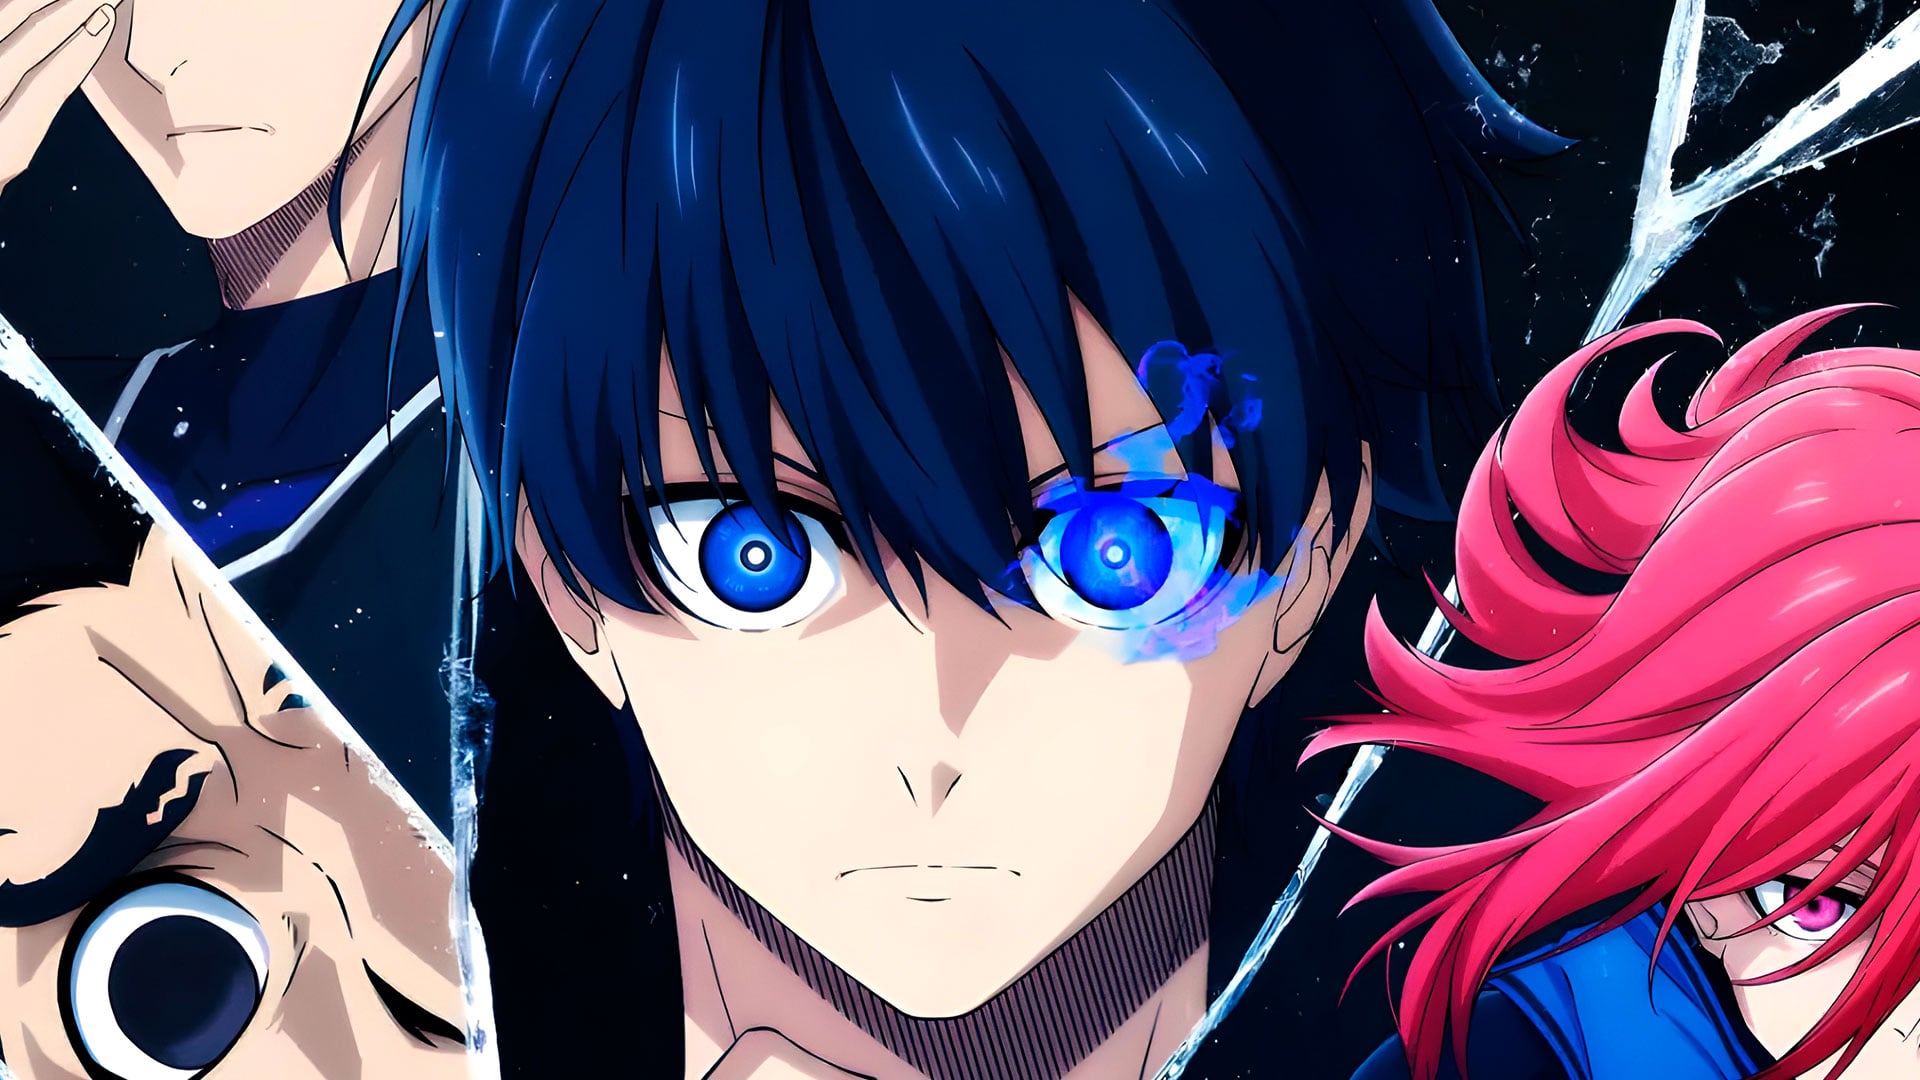 Anime Blue Lock HD Wallpaper by kri